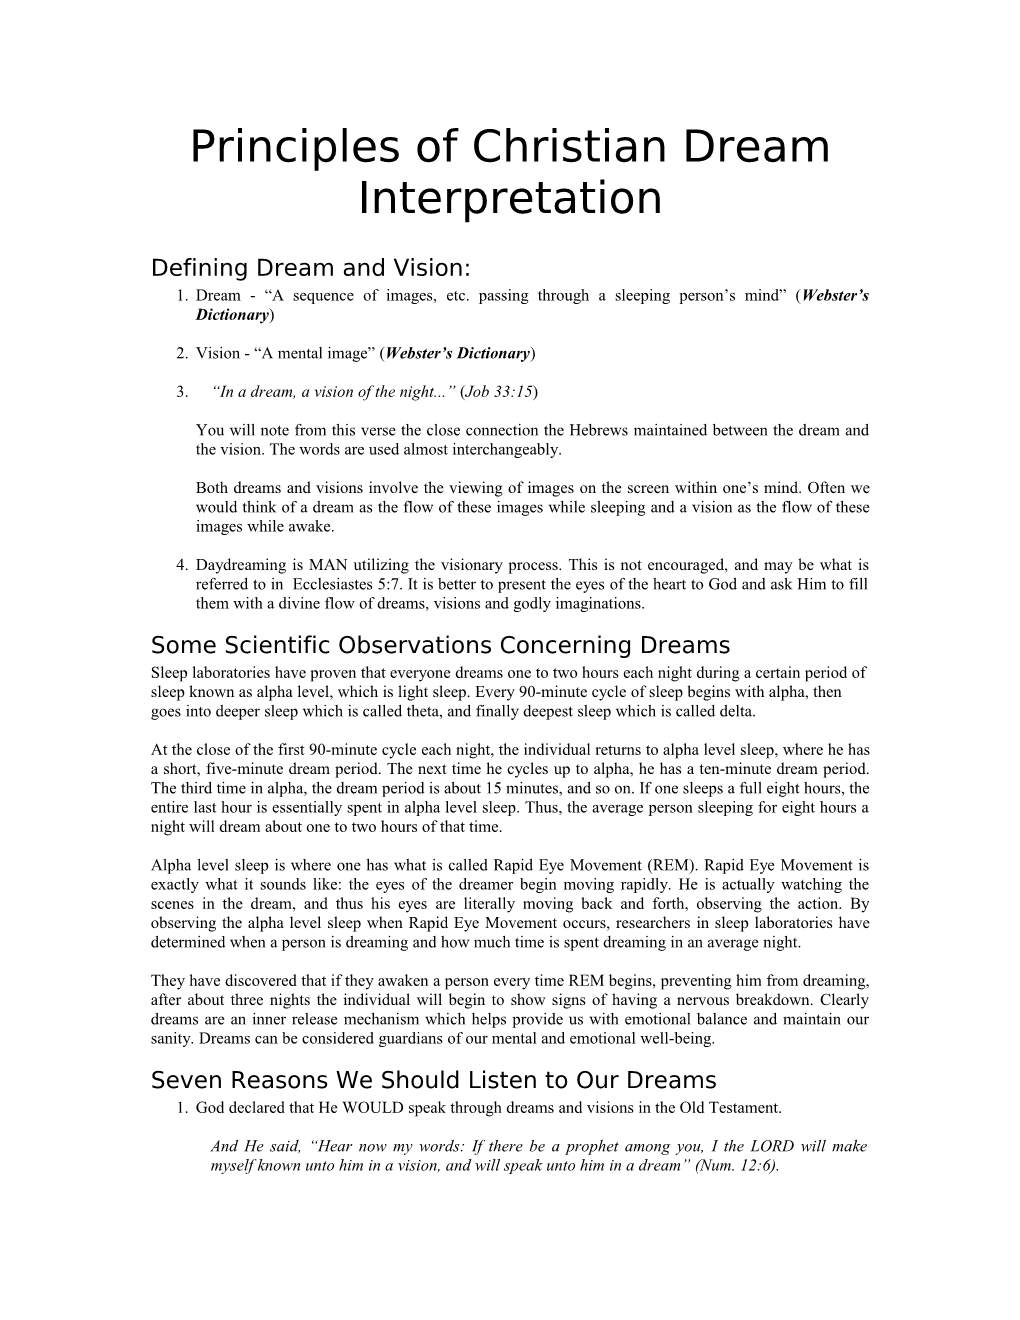 Principles of Christian Dream Interpretation